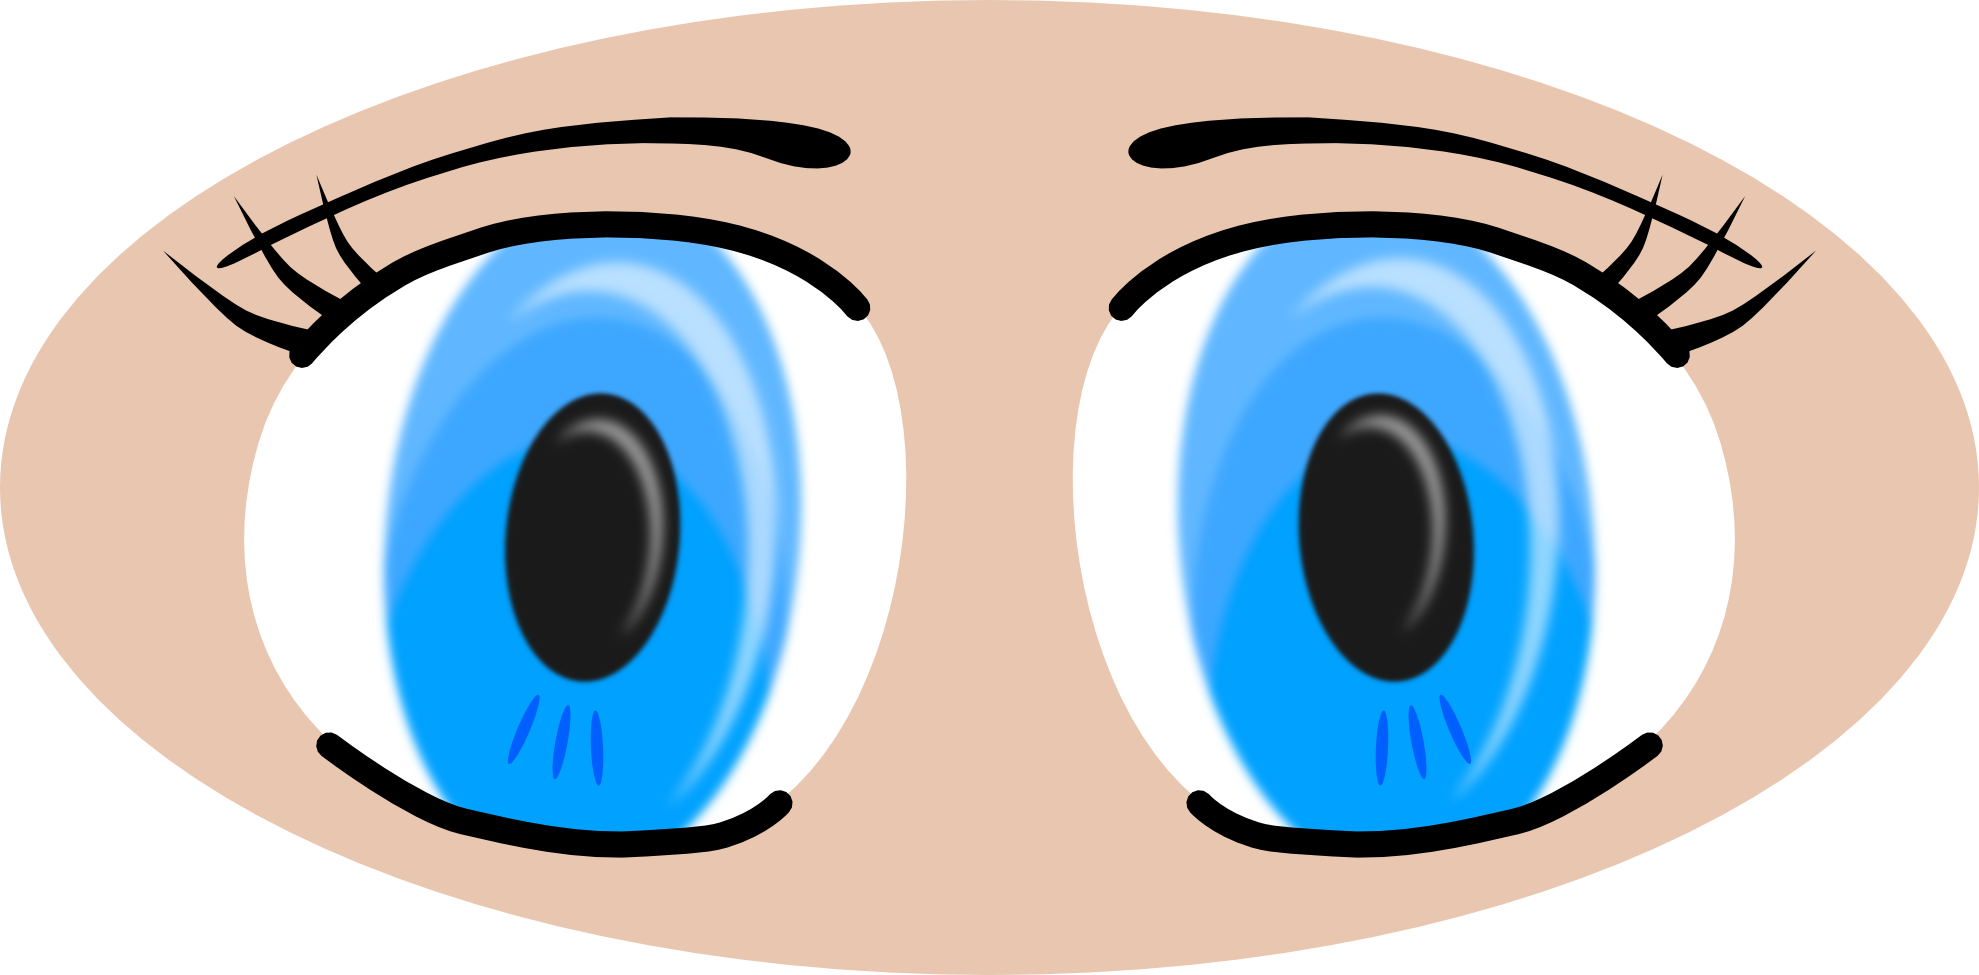 Eyes eye clipart 1 image - Clip Art Of Eyes